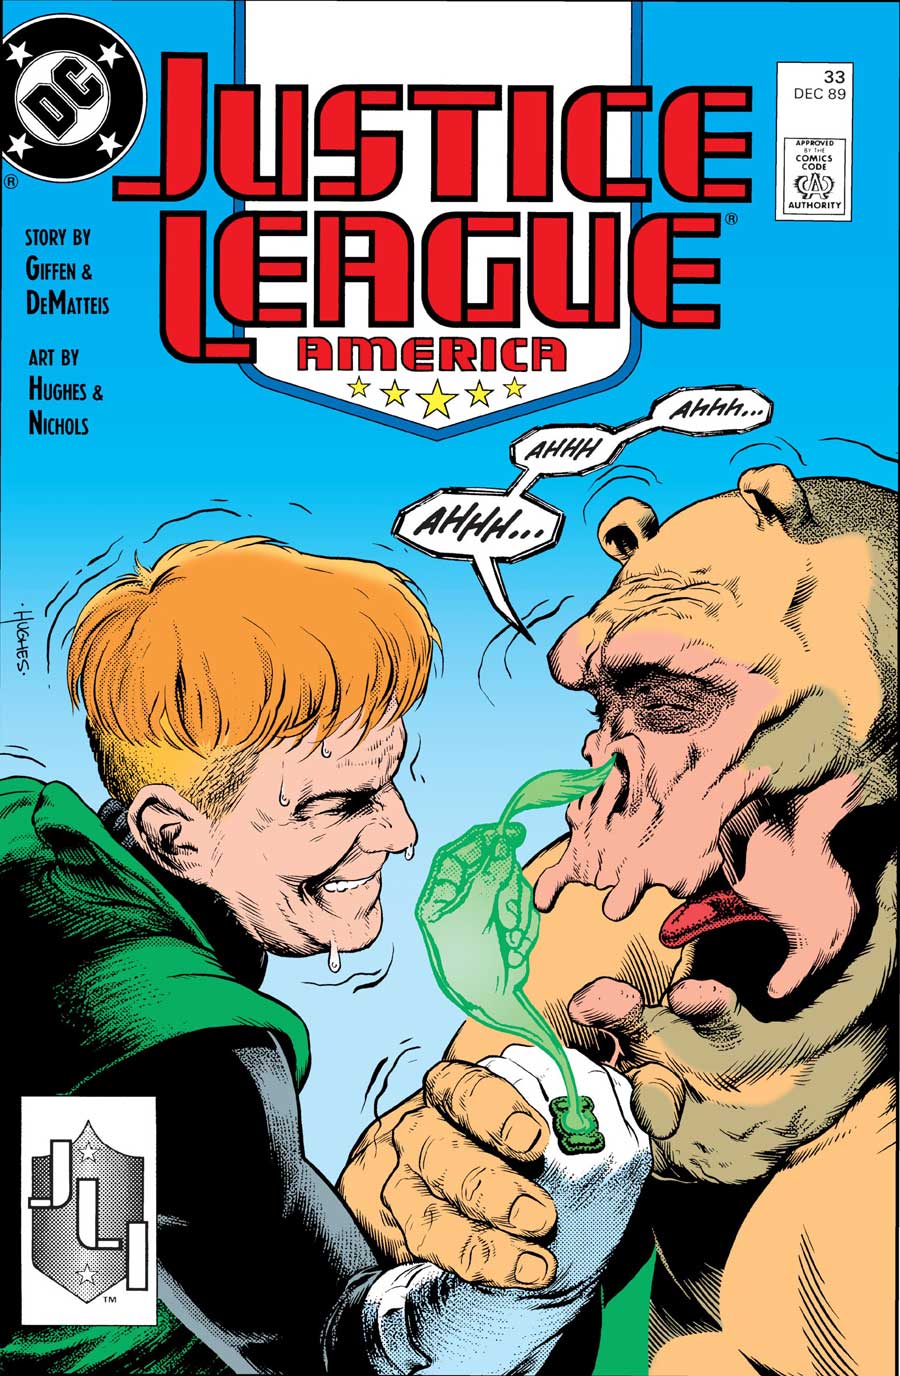 Justice League America #33 cover by Adam Hughes